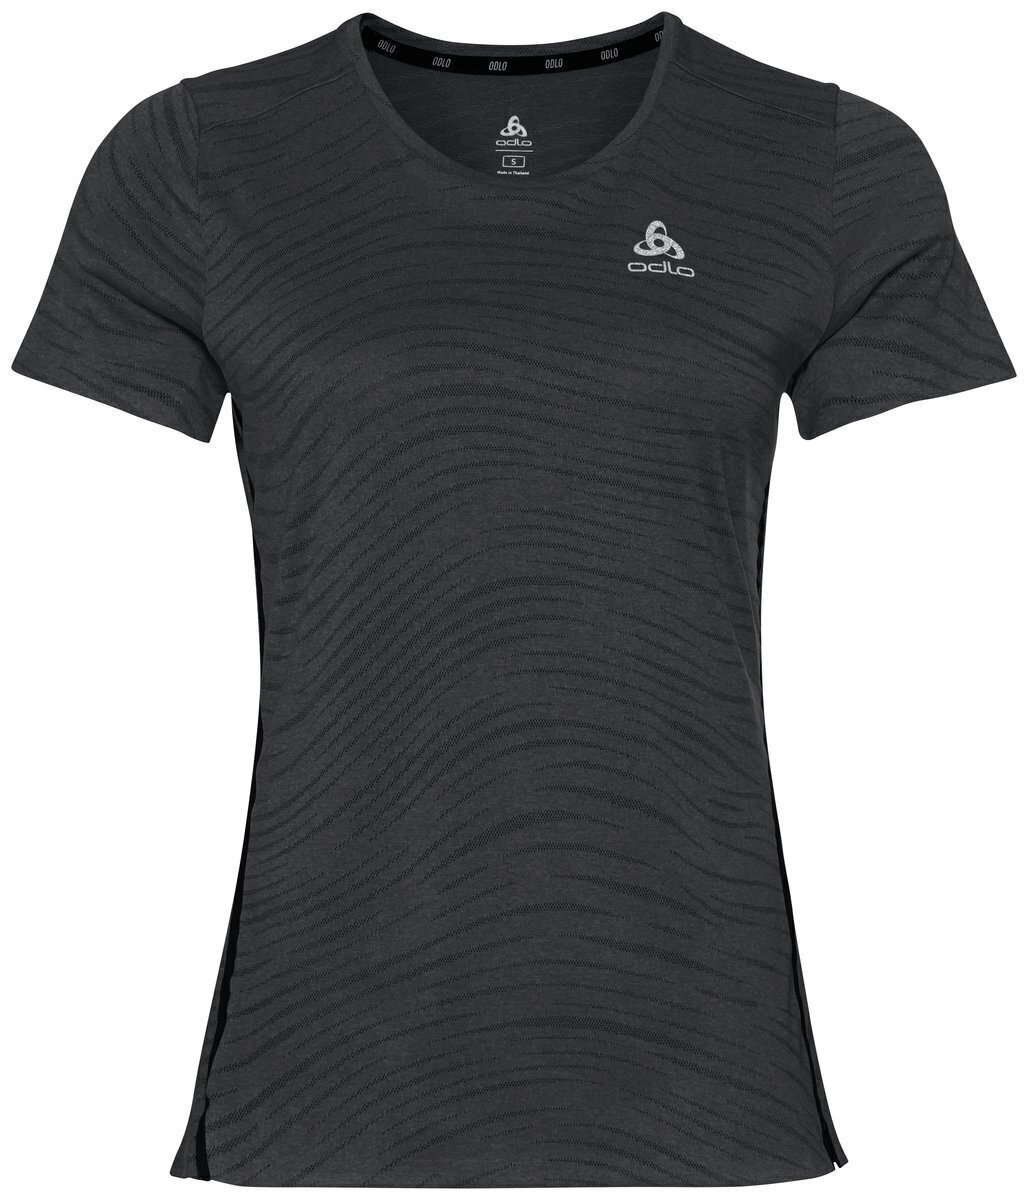 Bežecké tričko s krátkym rukávom
 Odlo Zeroweight Engineered Chill-Tec T-Shirt Black Melange M Bežecké tričko s krátkym rukávom